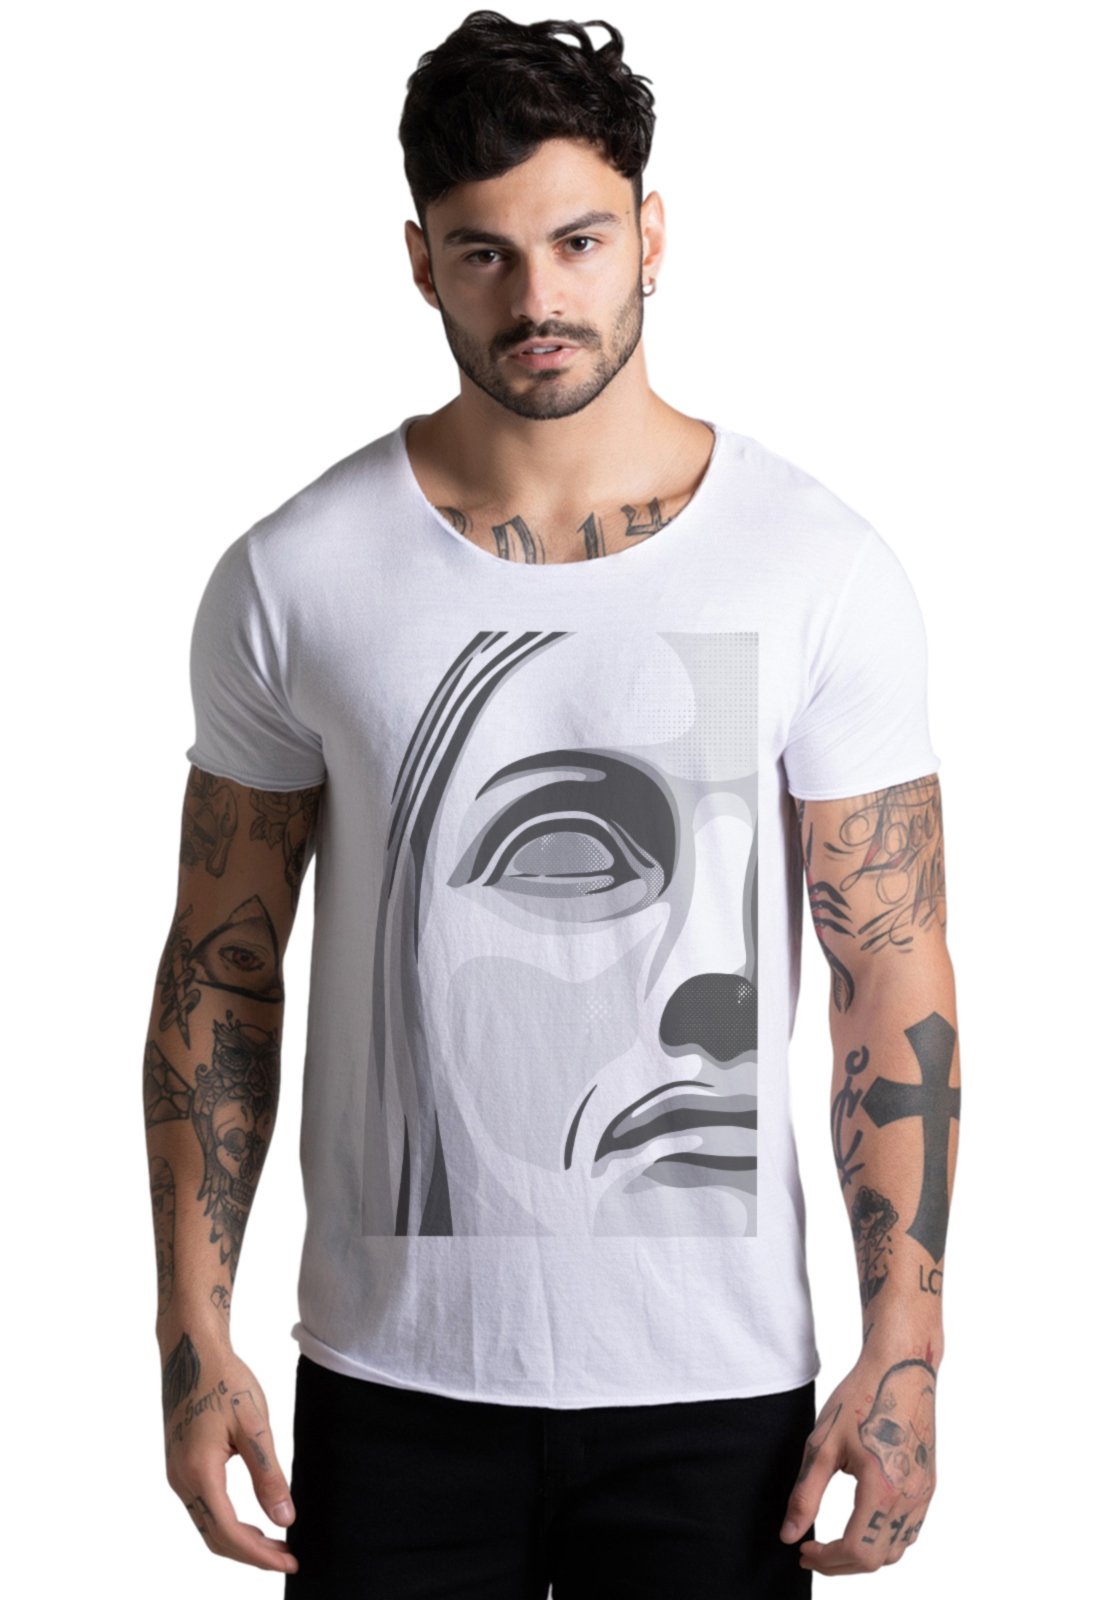 Joss-Camiseta-Joss-Corte--C3-A0-Fio-The-Christ-Branca-DTG-5728-3420508-1-zoom